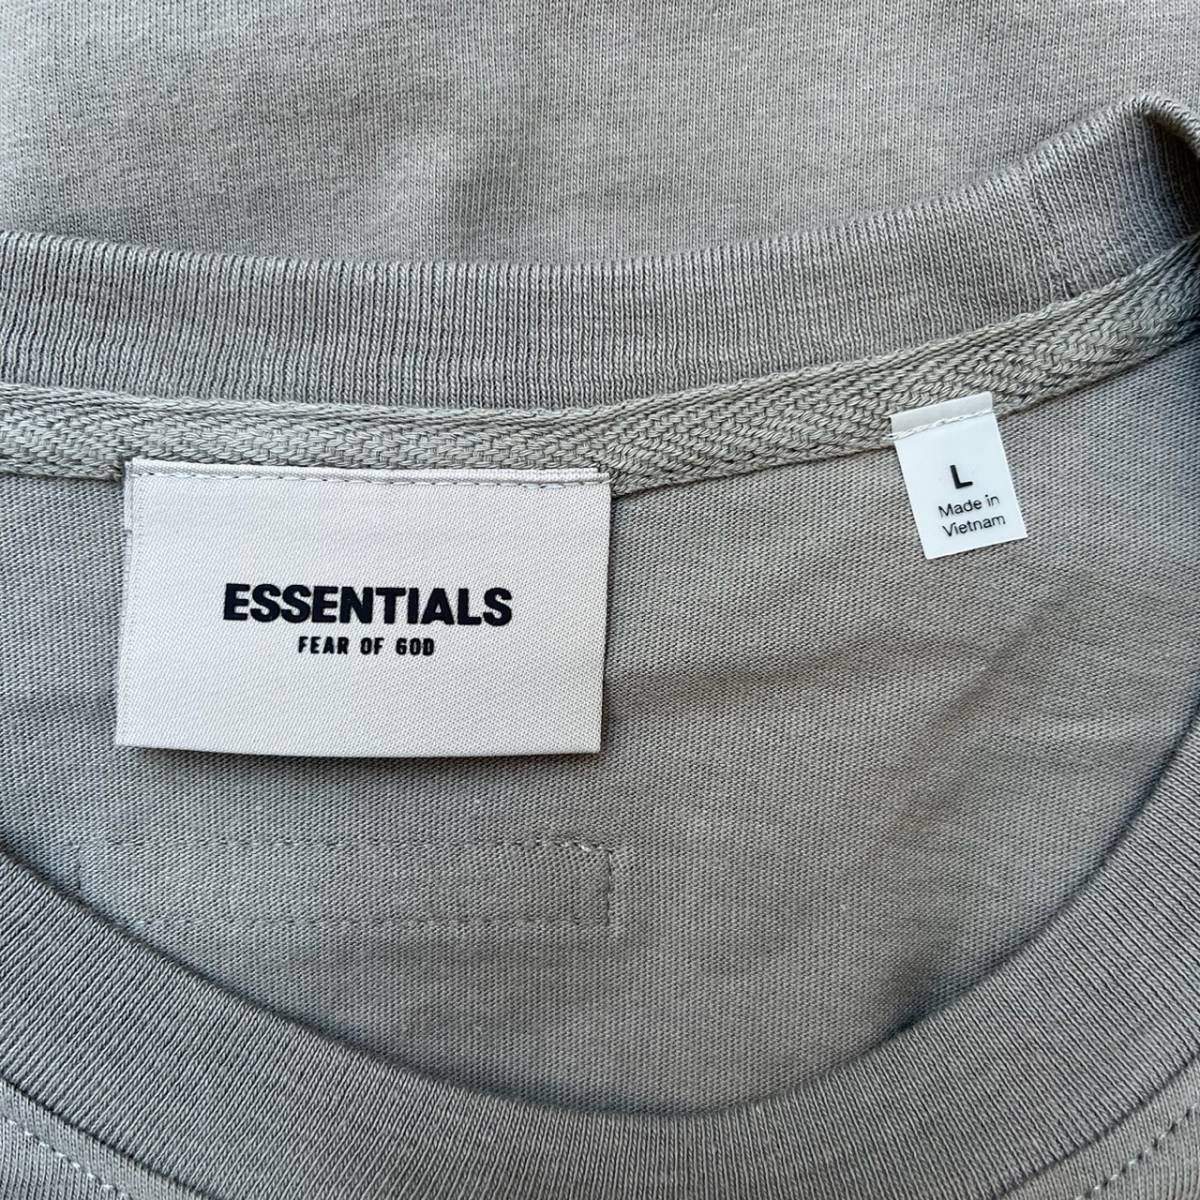 essentials Tシャツ グレー Lサイズ